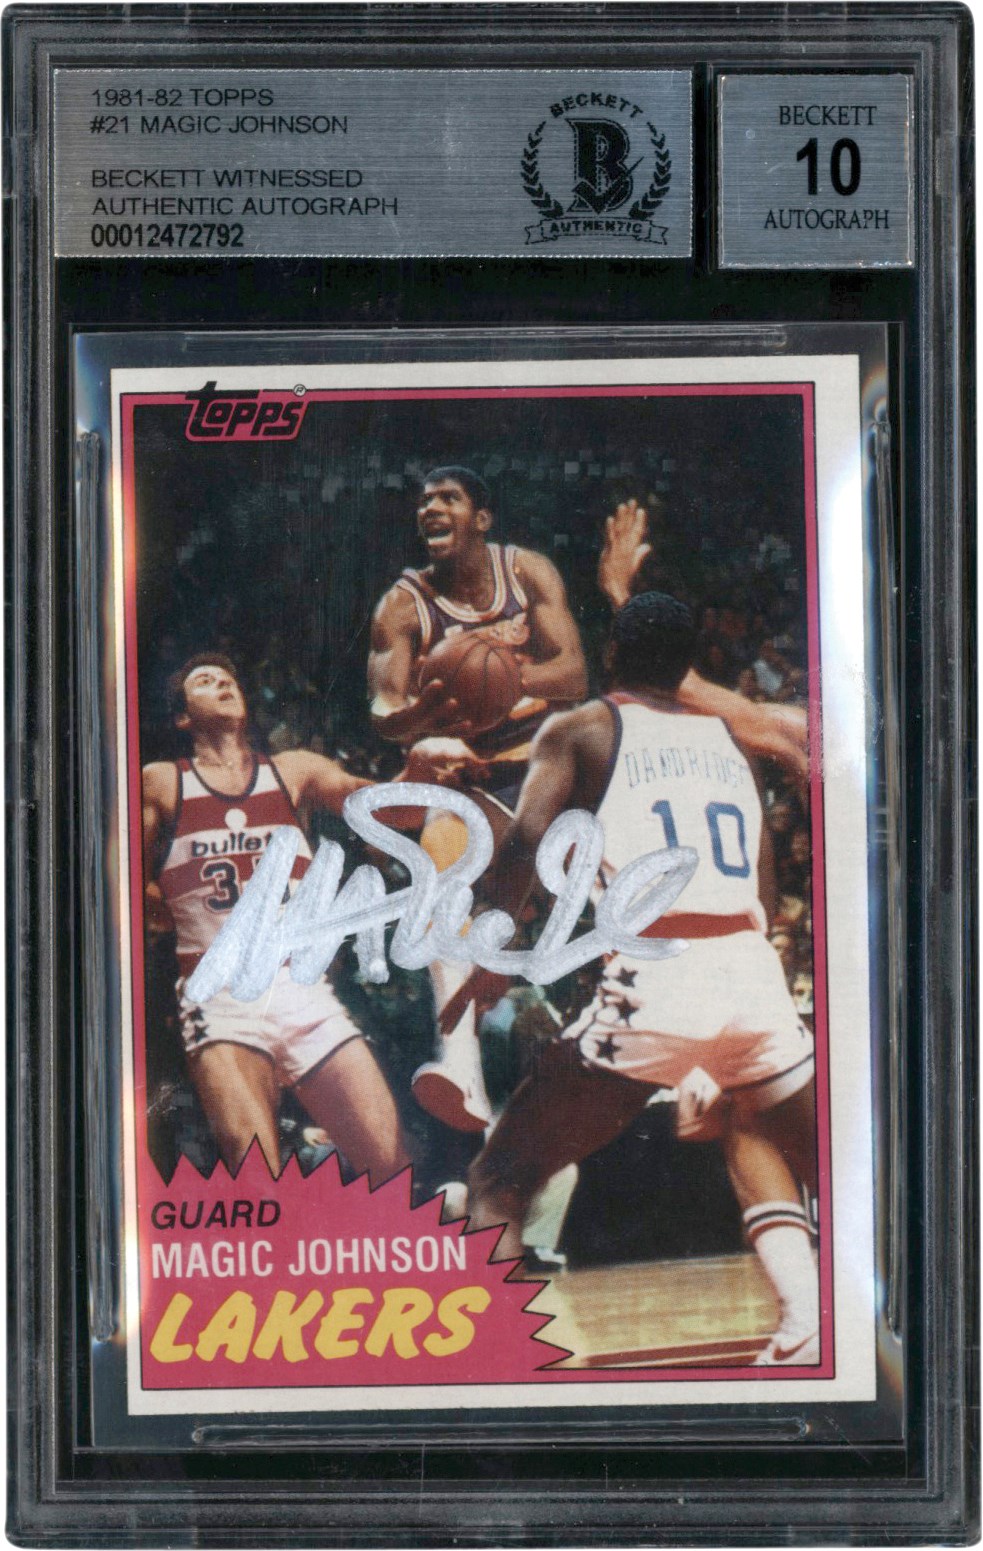 Basketball Cards - 1981-1982 Topps Basketball #21 Magic Johnson Signed Beckett Auto 10